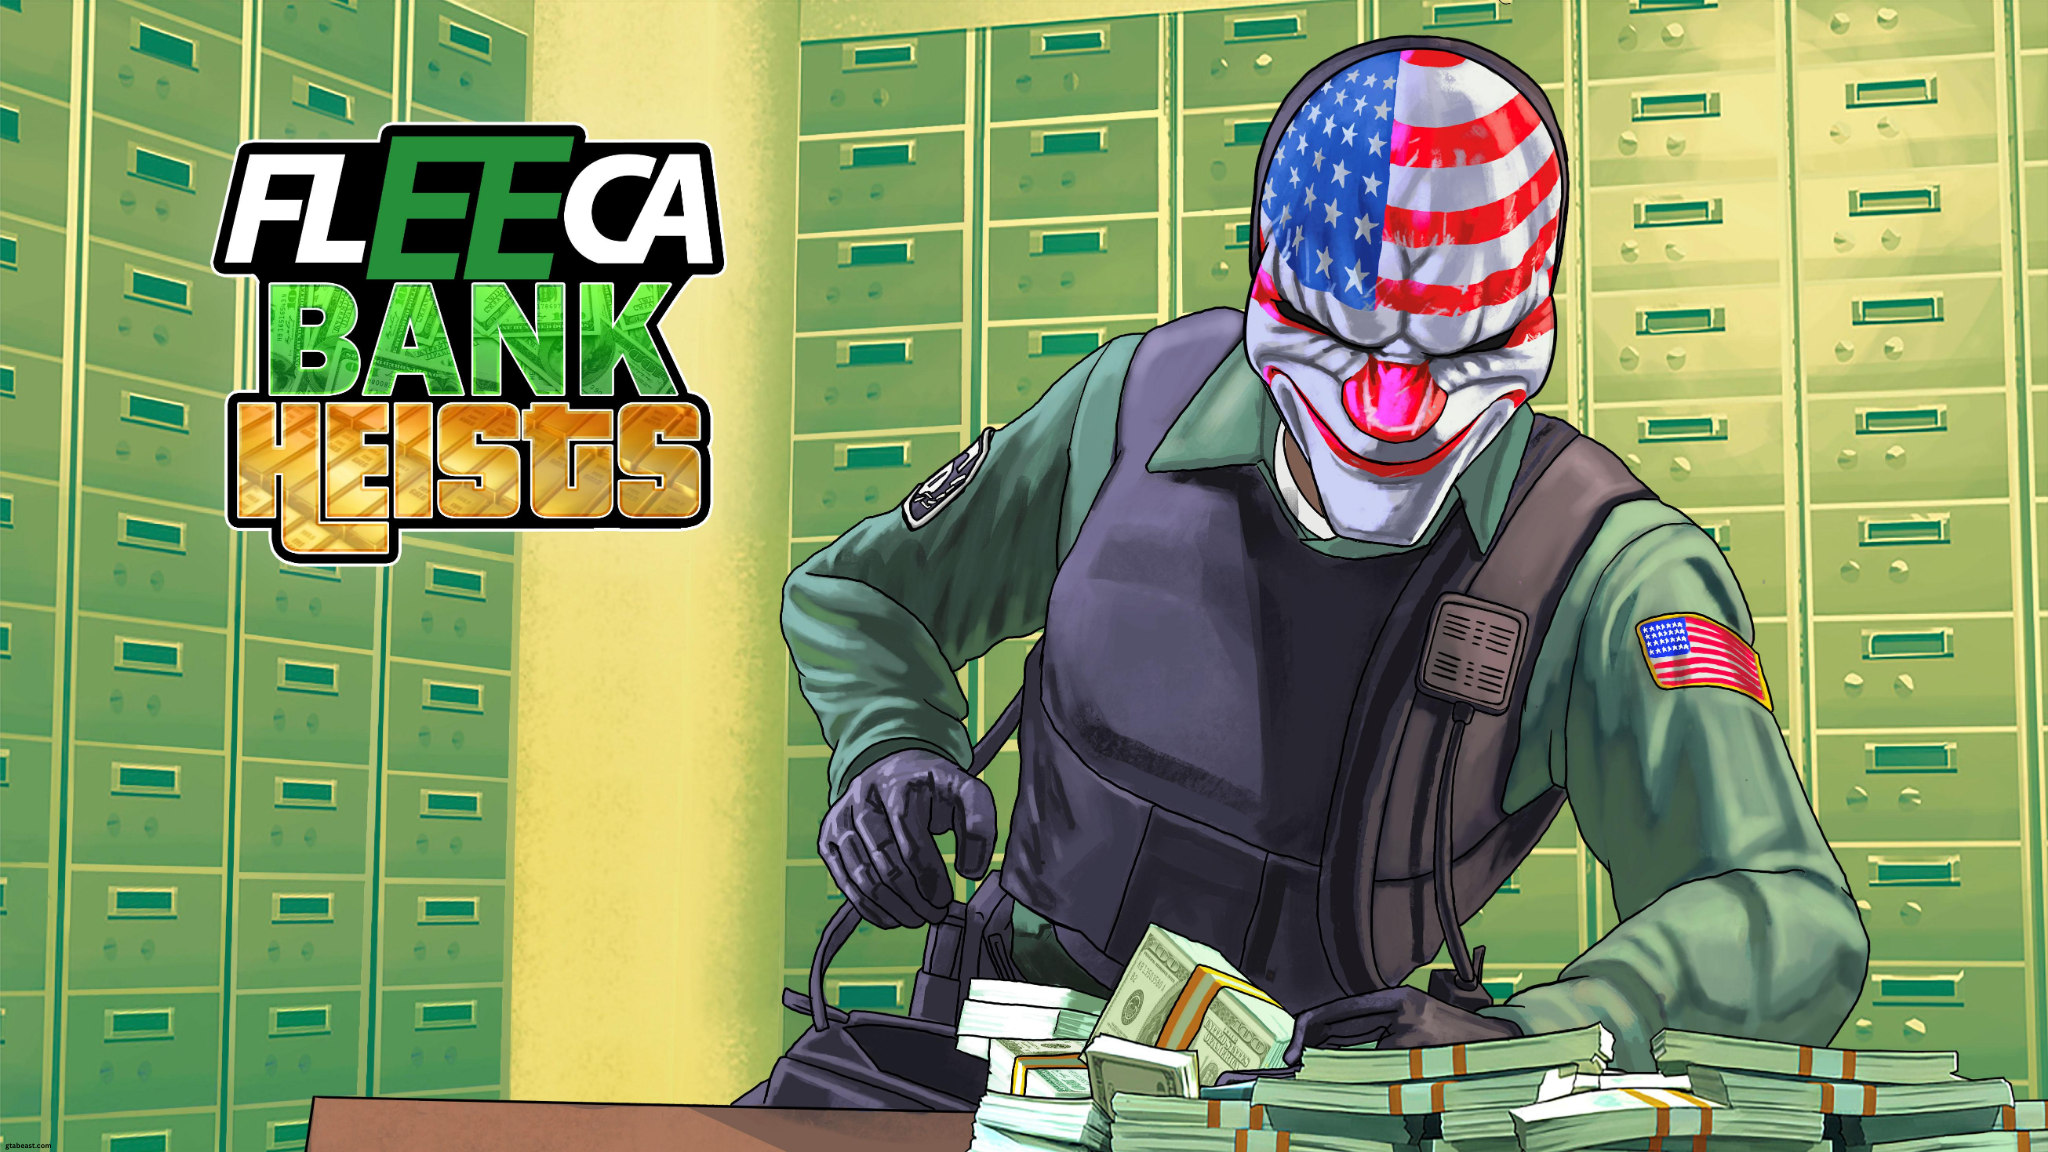 Rob Fleeca Bank In GTA 5 Offline